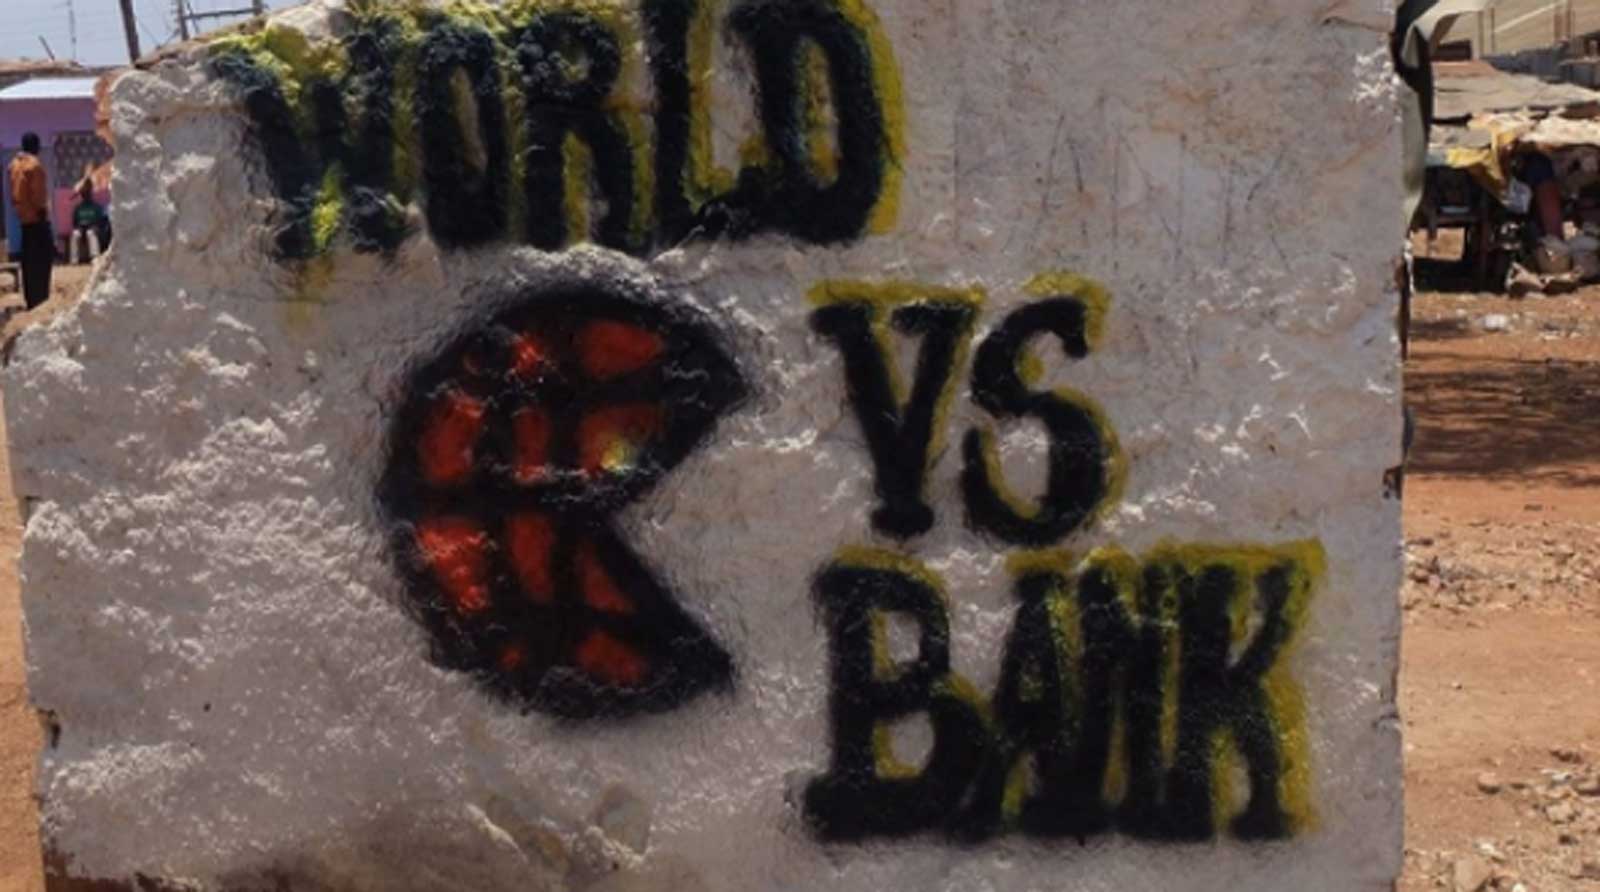 Graffiti pushing back against the World Bank